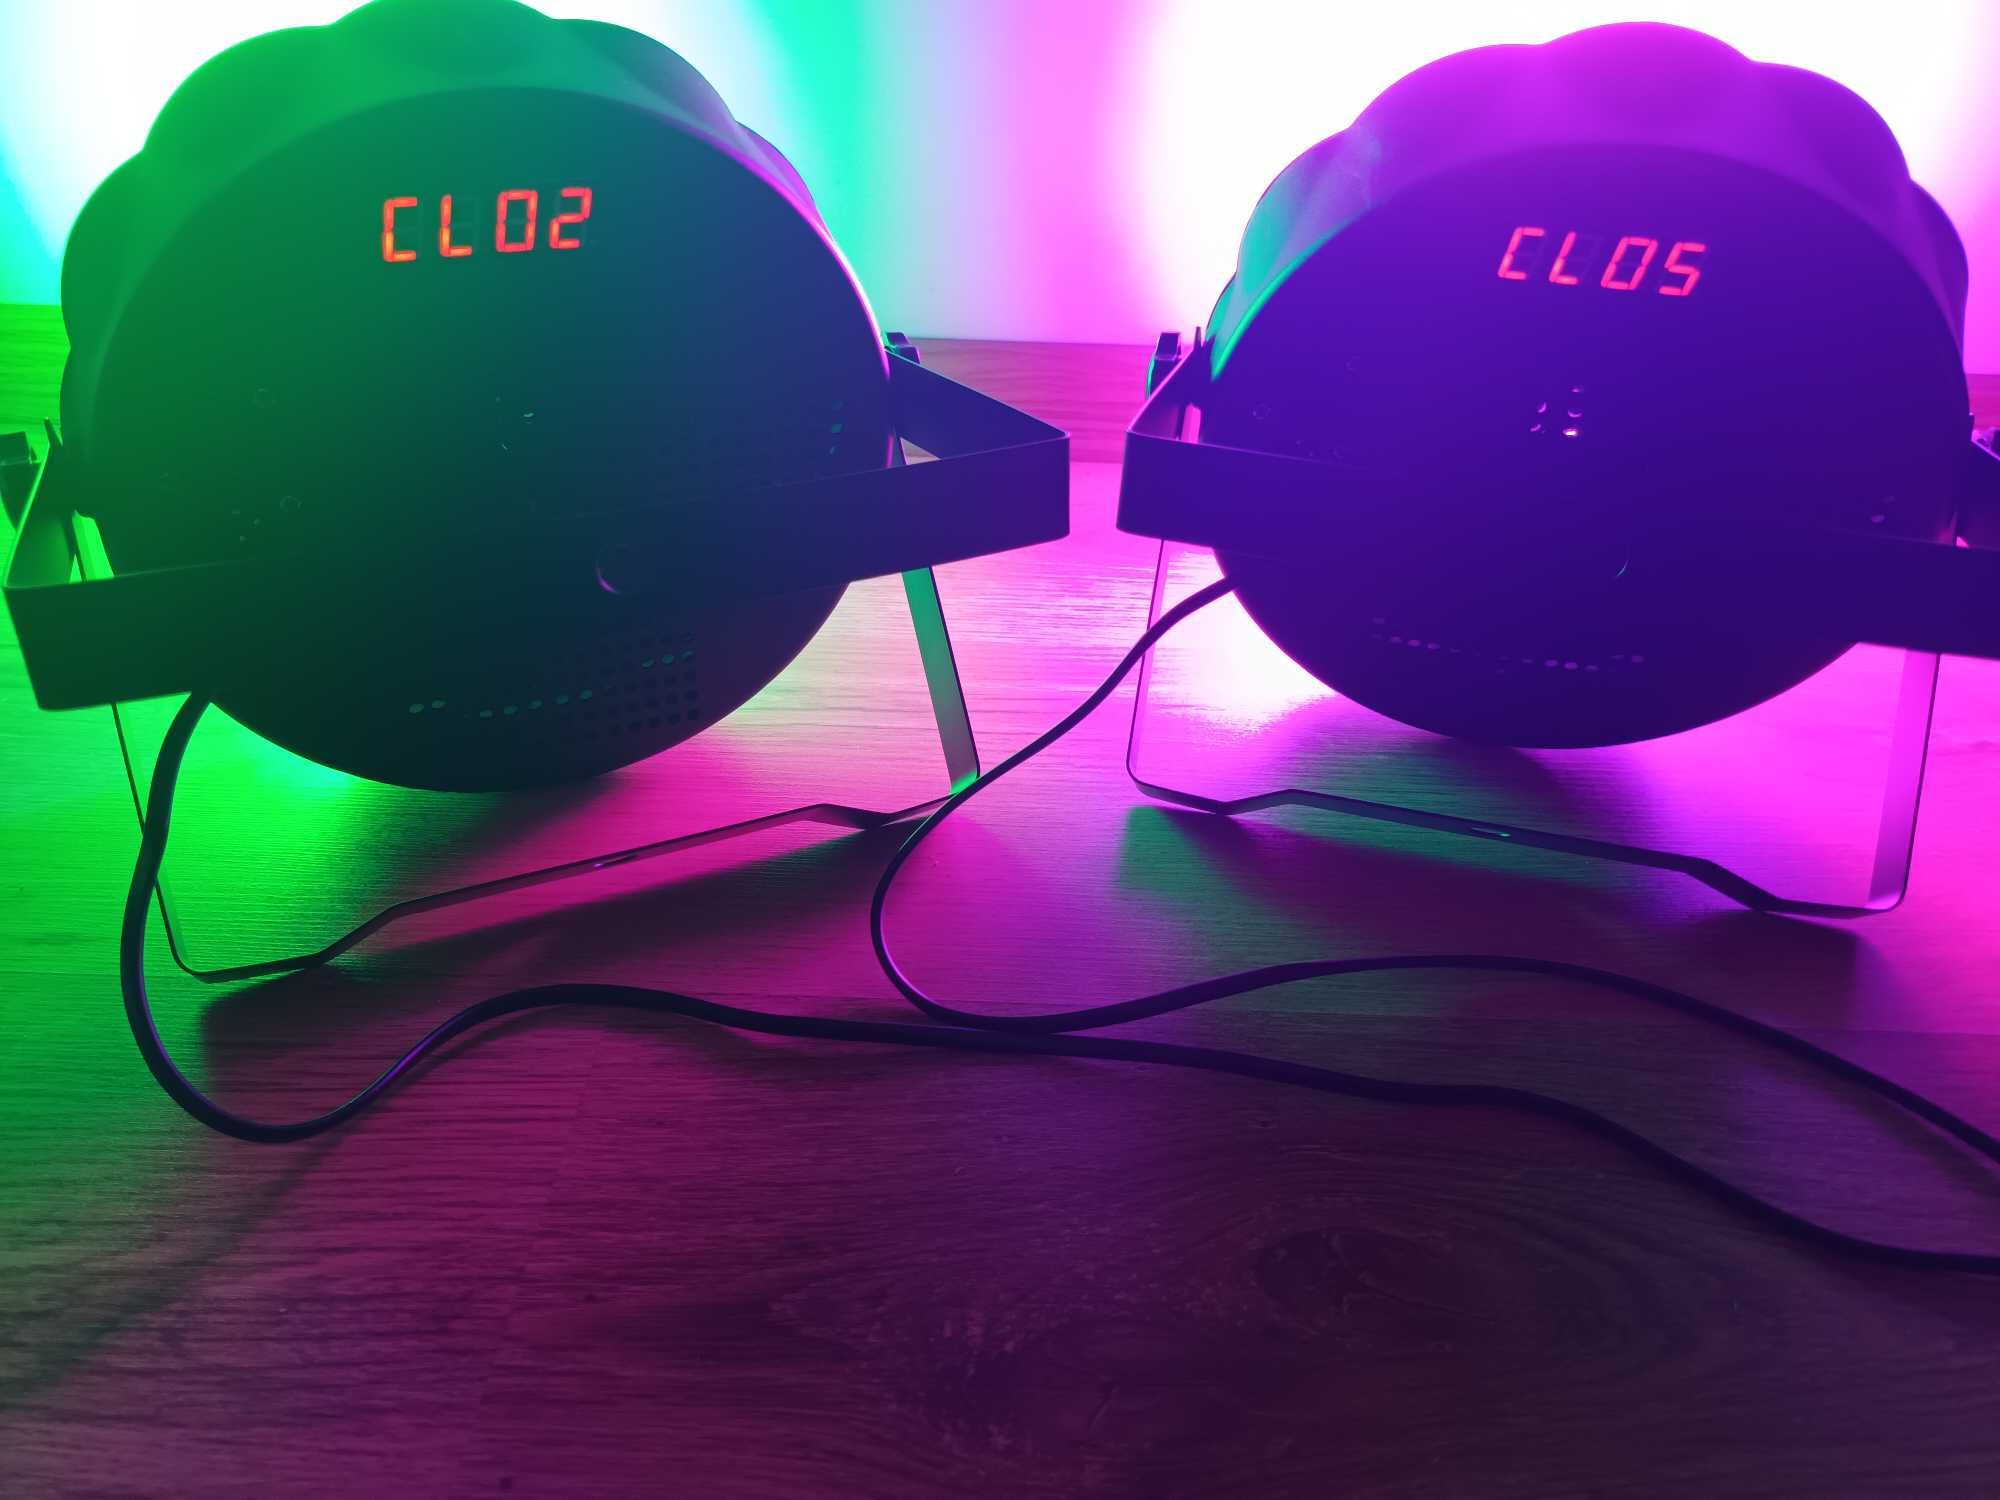 Orga de culori 54 LED-uri * Joc de culori Club * Microfon integrat